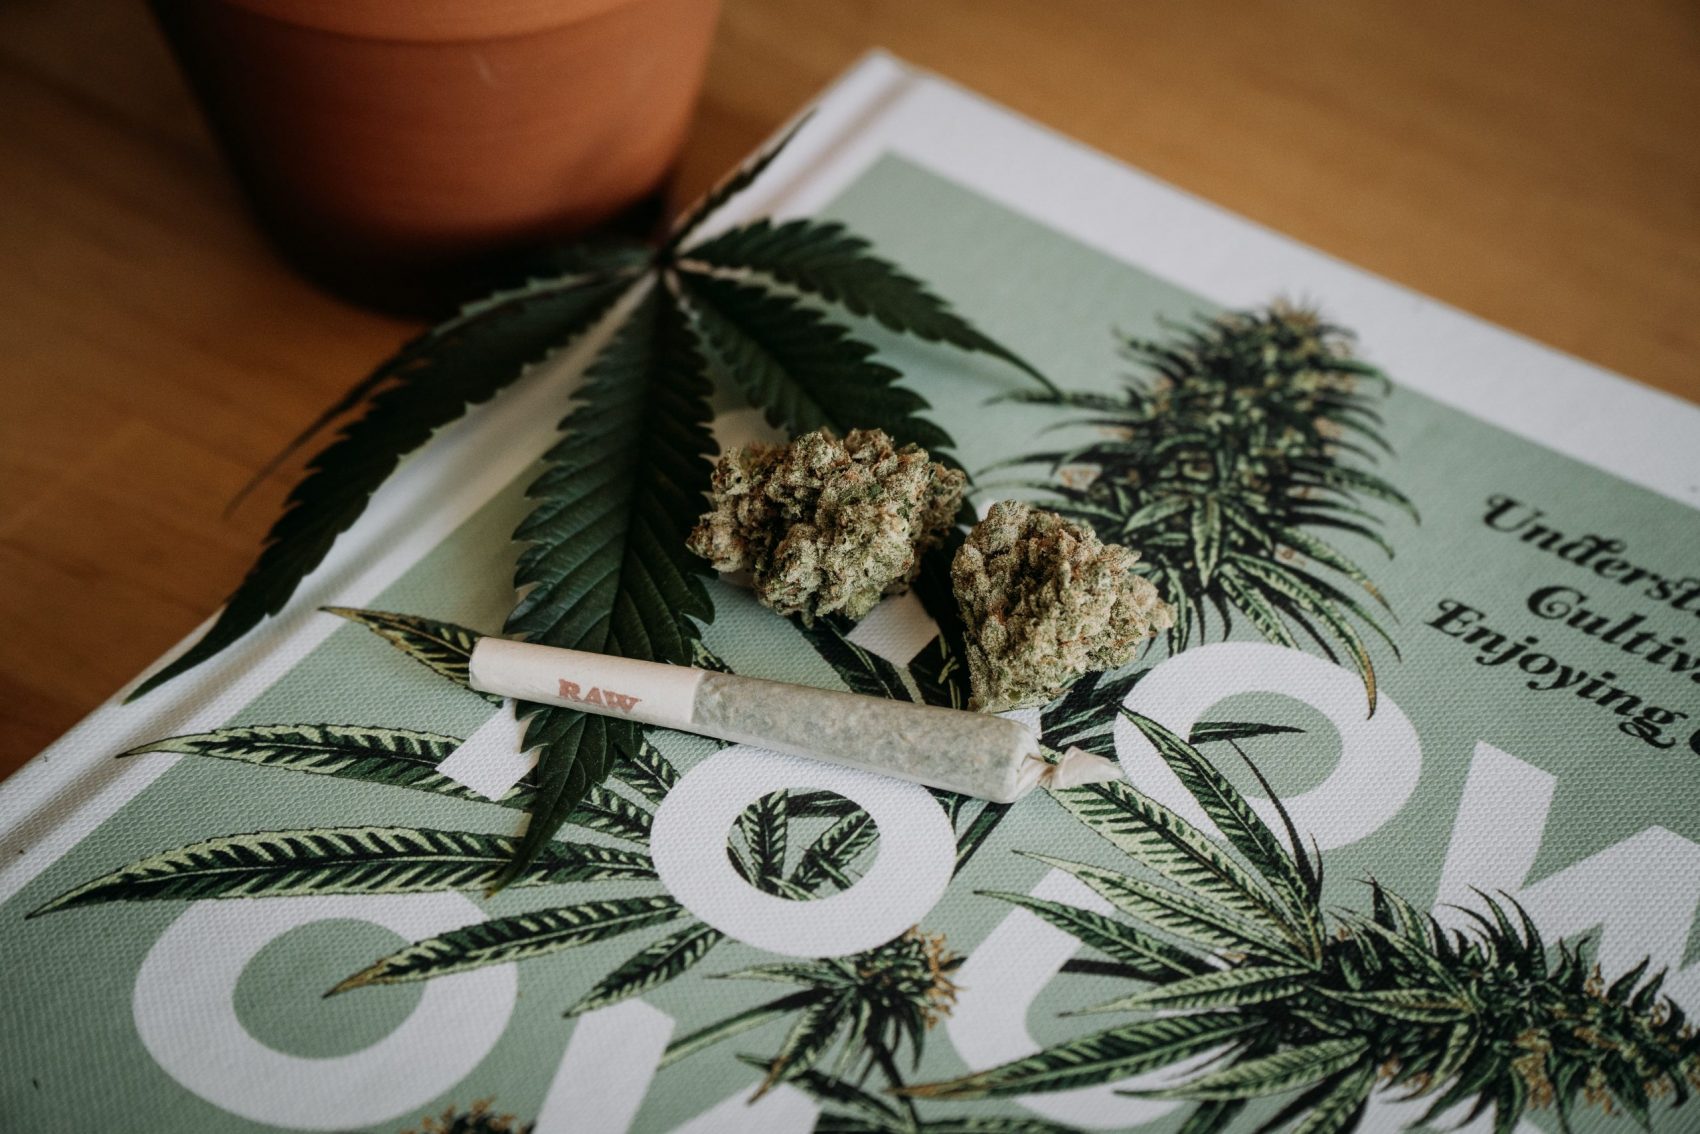 Wyoming cannabis legalization